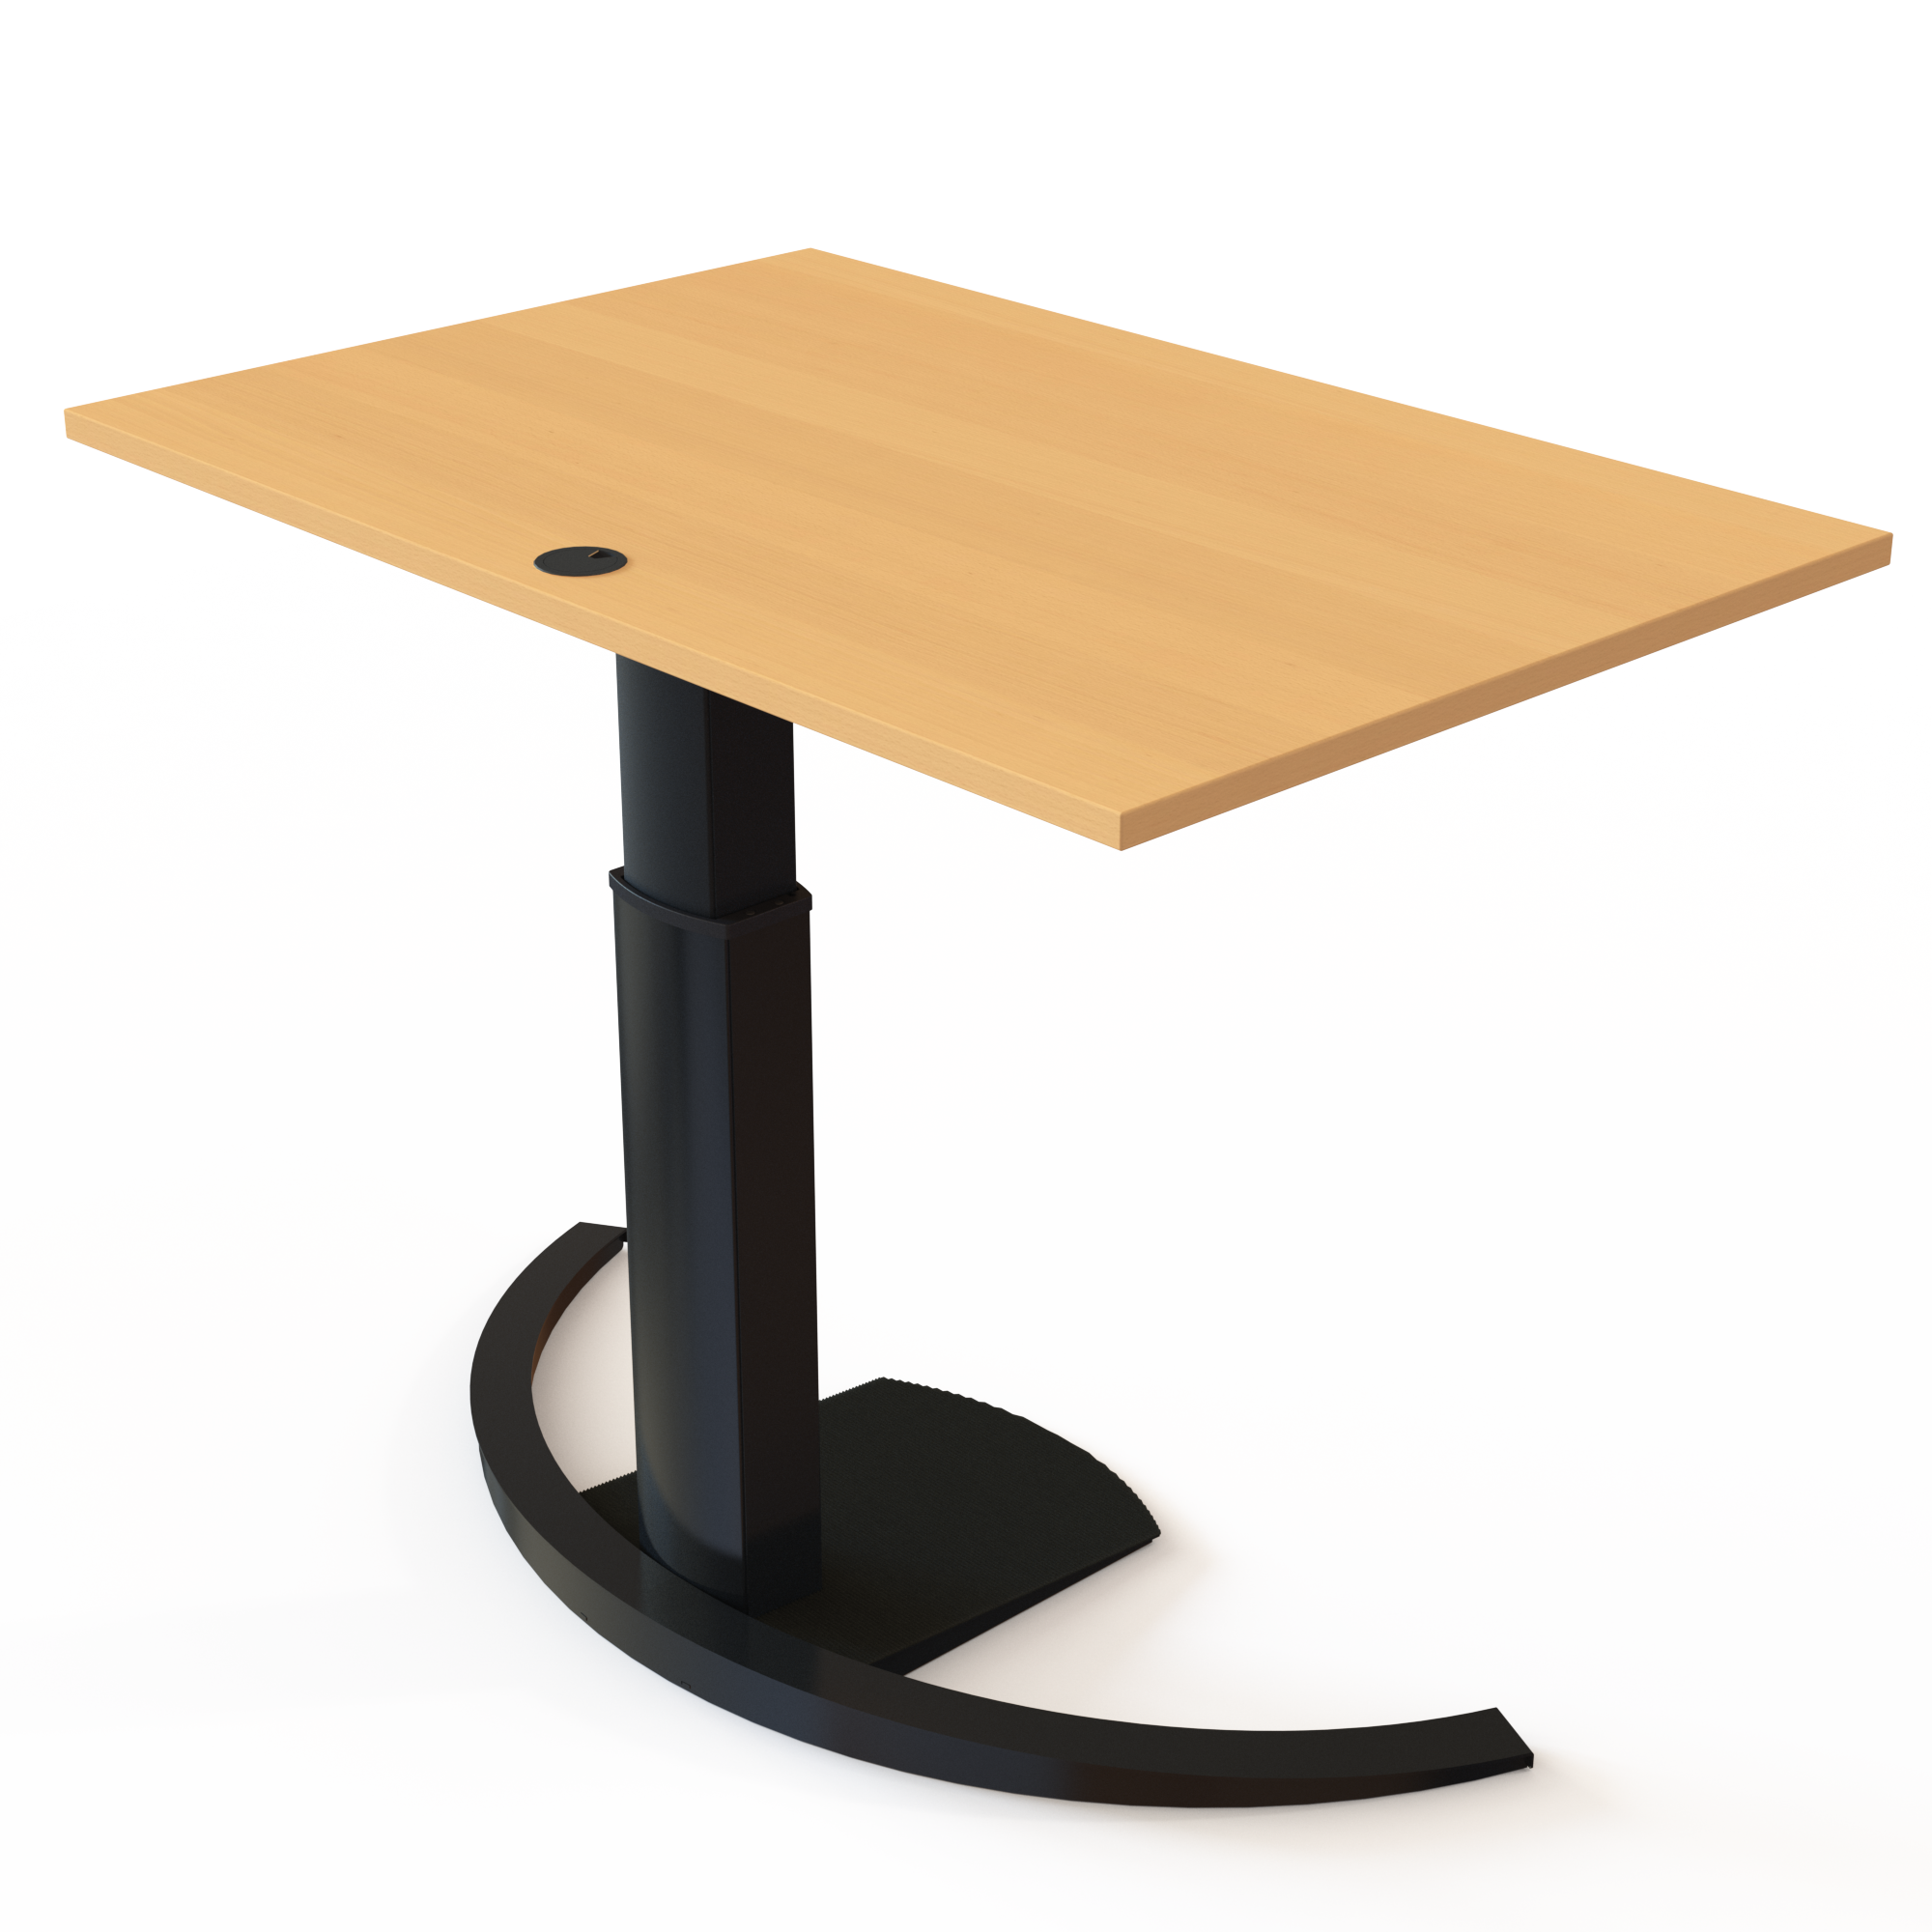 Electric Adjustable Desk | 120x80 cm | Beech with black frame